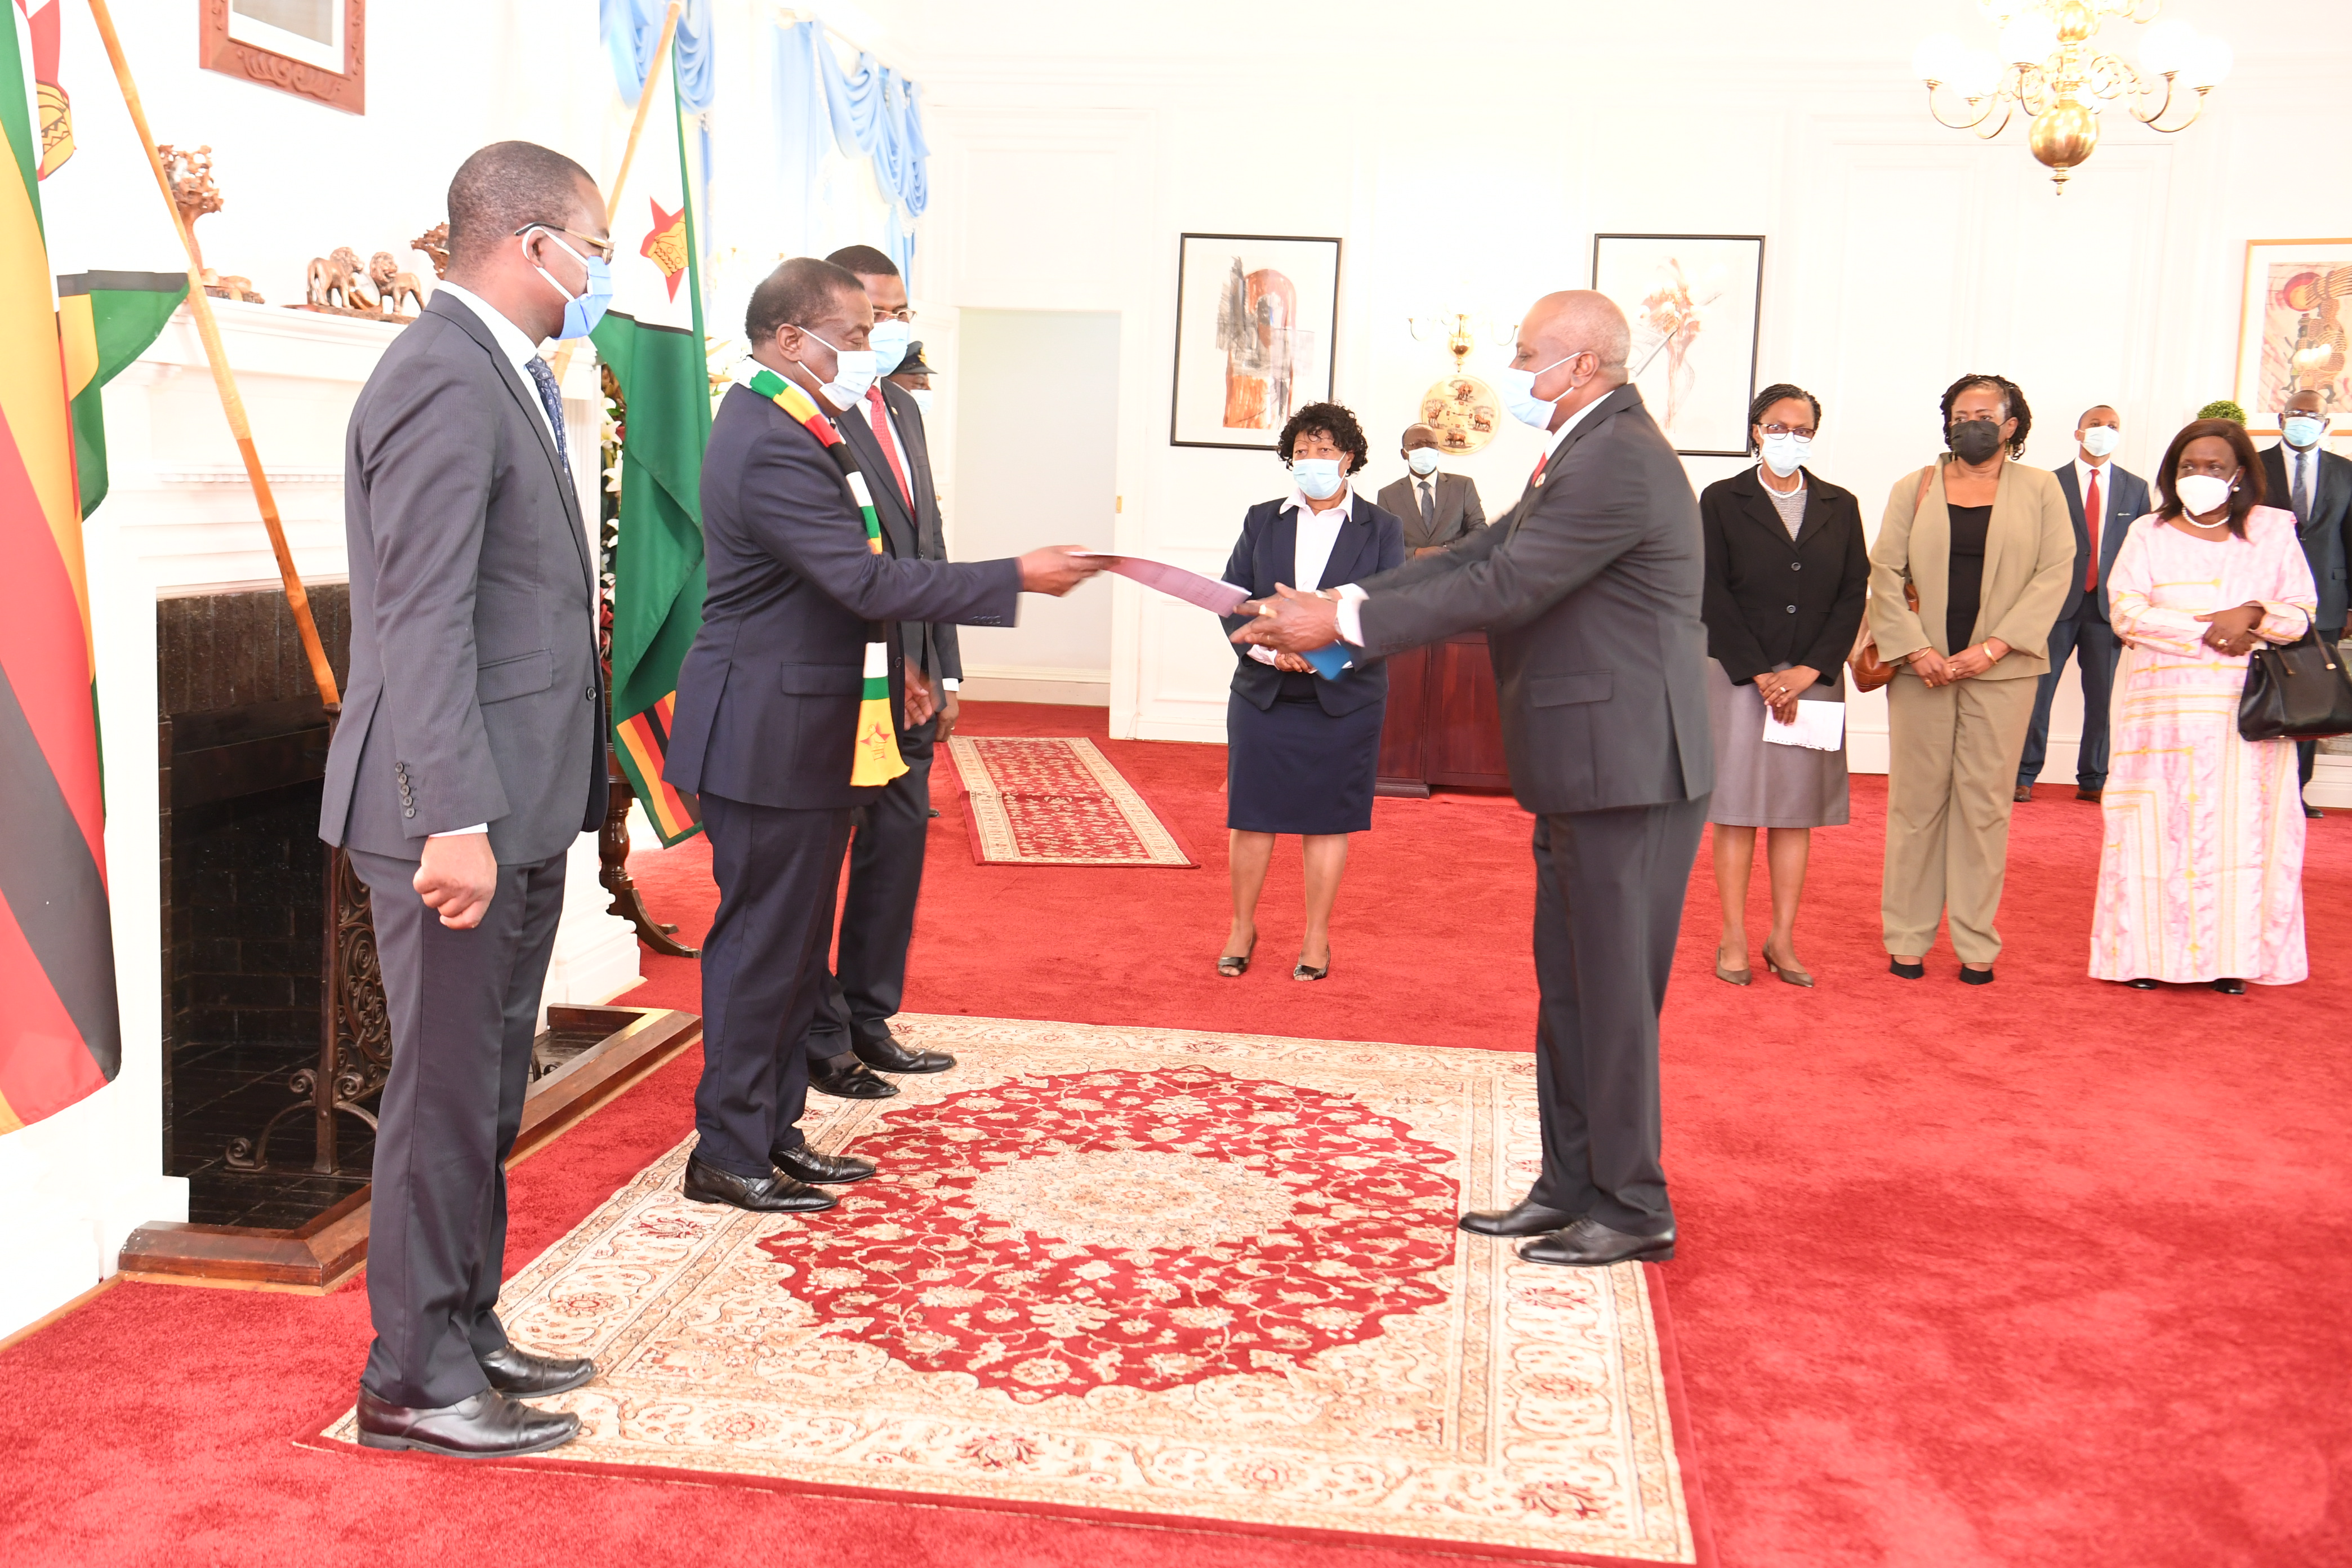 UN Secretary General's Representative to Zimbabwe Edward Kallon presents credentials to President 